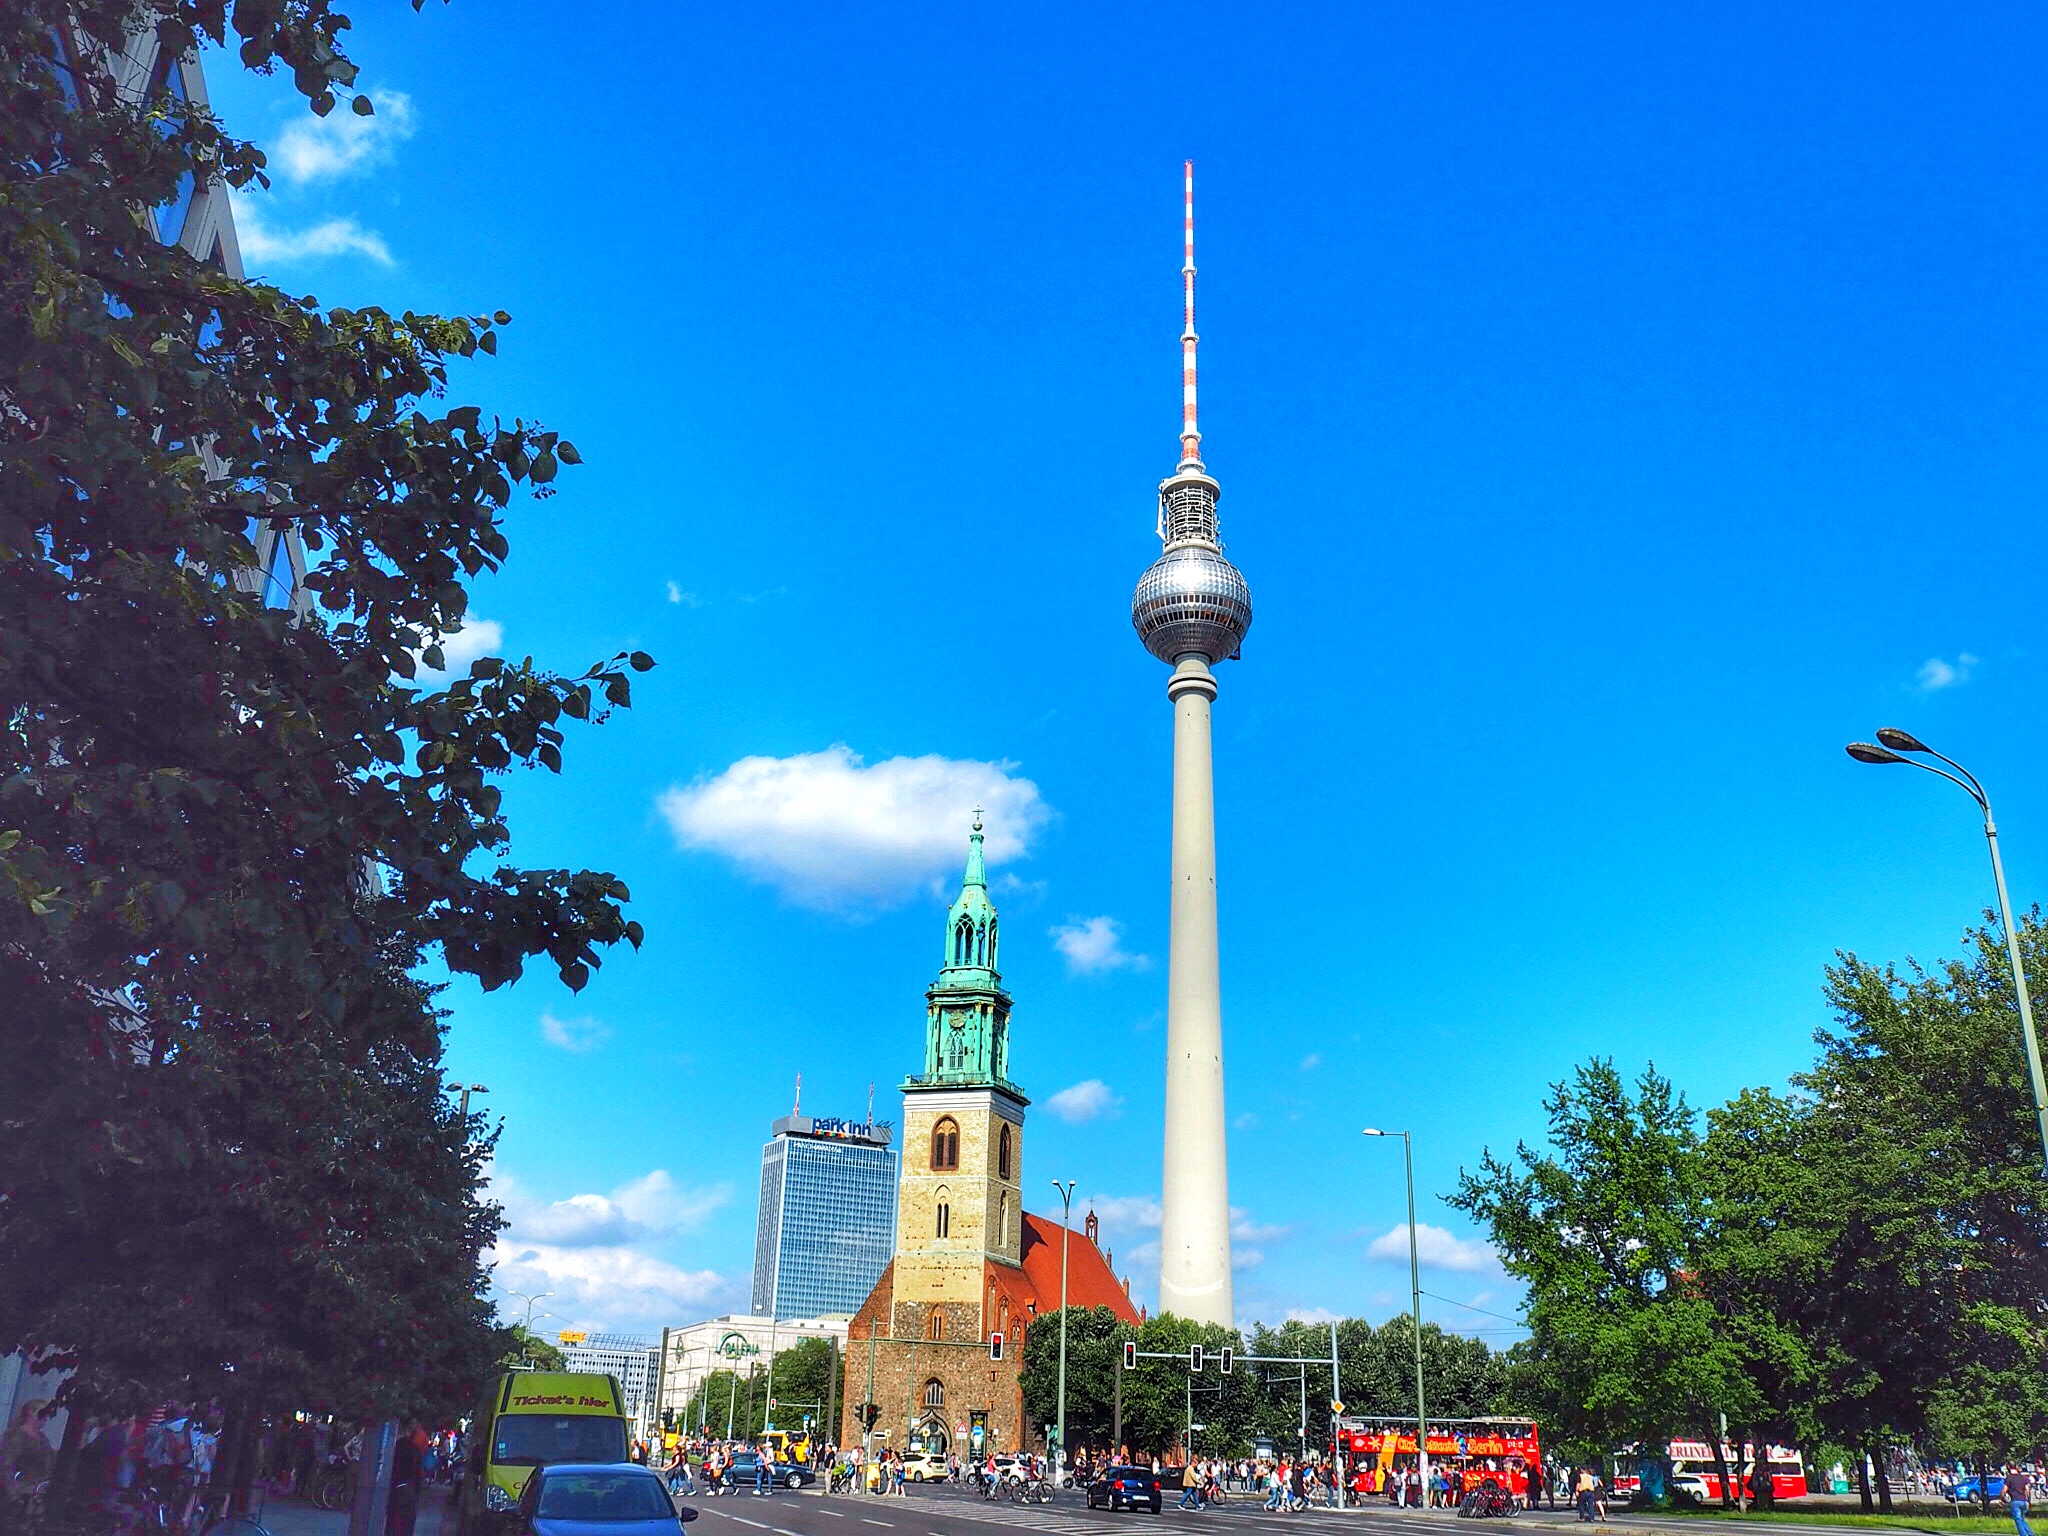 TV Tower Berlin - Enjoy the Adventure travel blog